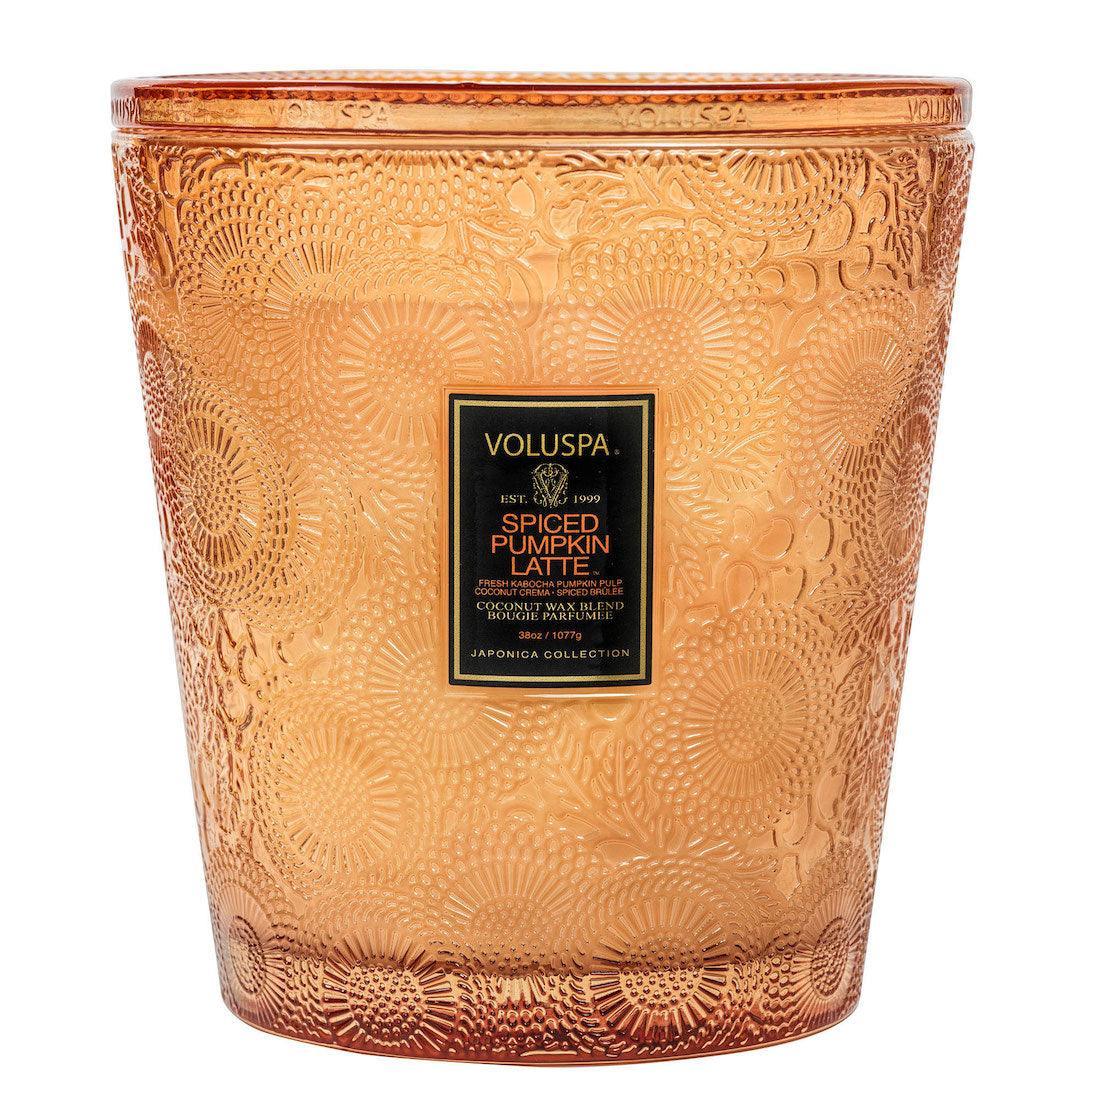 Voluspa - 5-Docht Duftkerze Spiced Pumpkin Latte | Japonica Limited Holiday Edition | 3,5 kg - Codeso Living